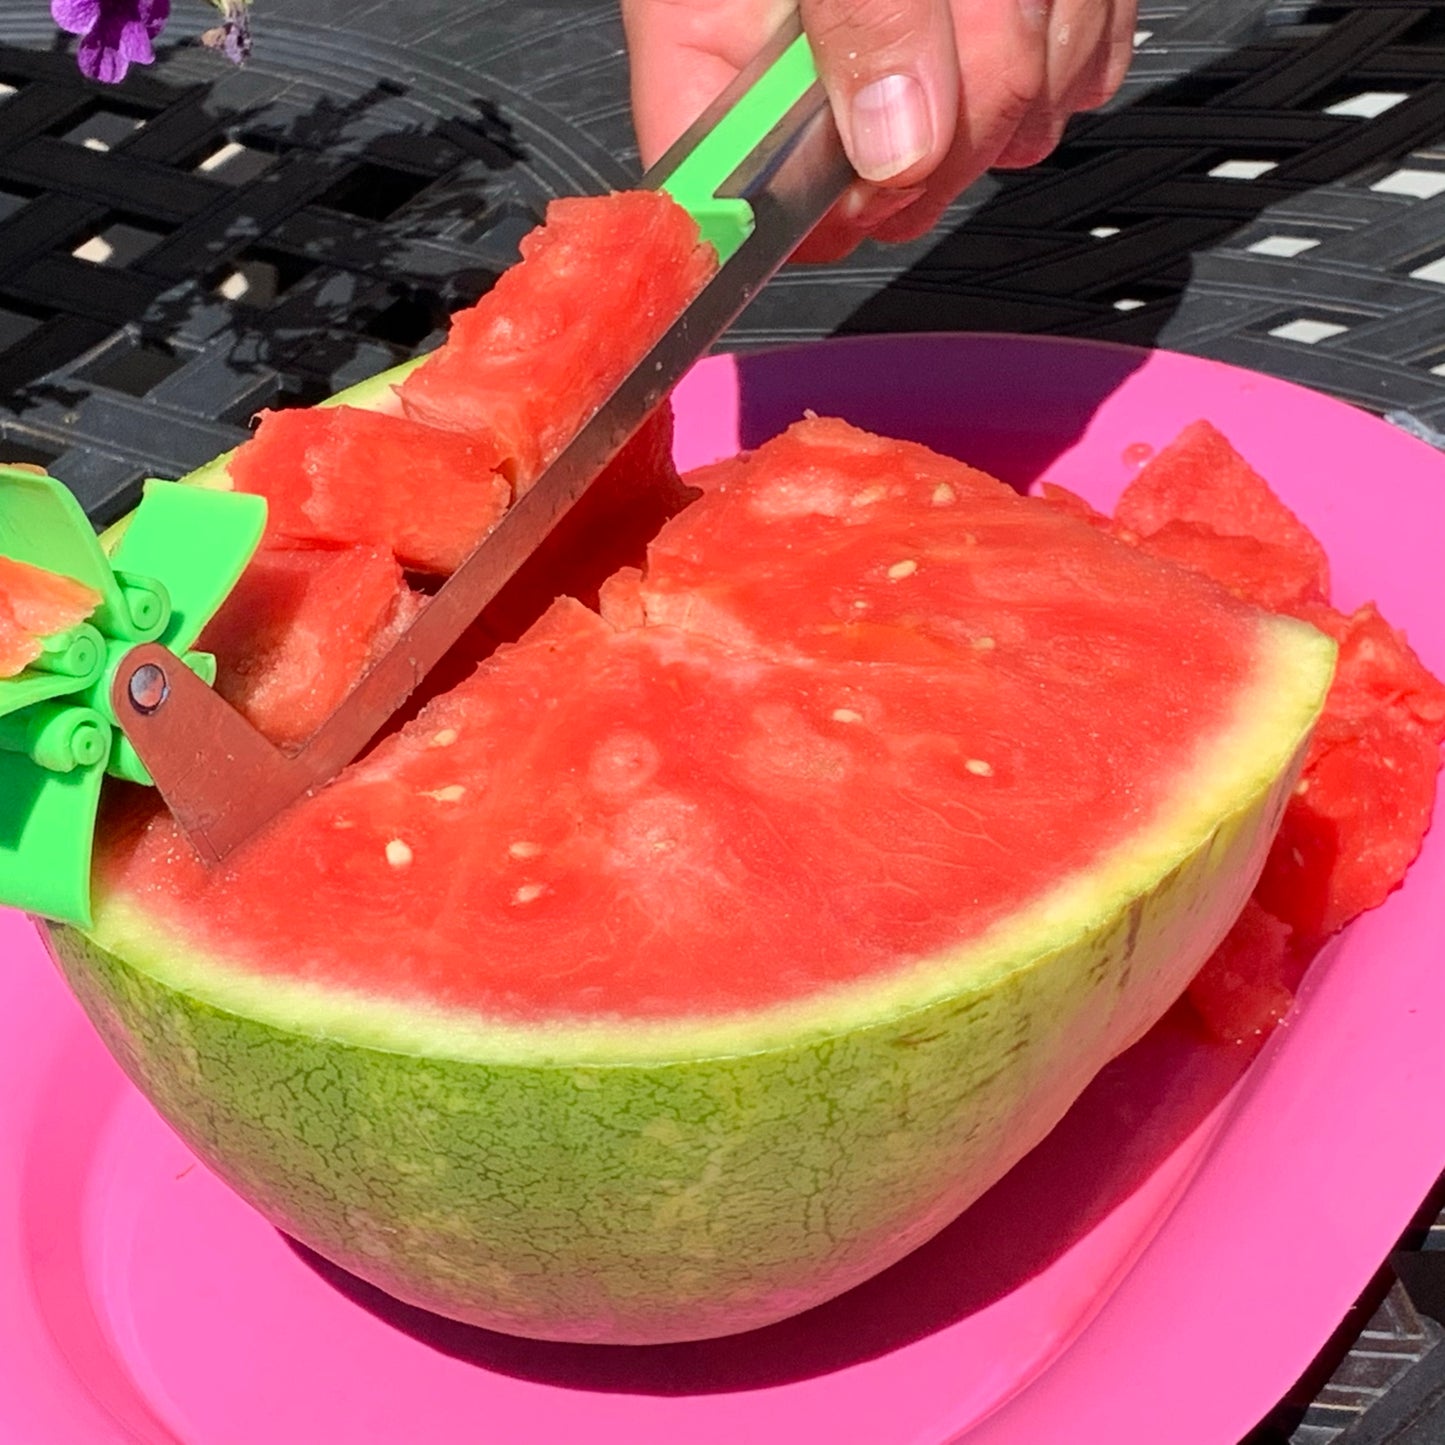 Stainless Watermelon Slicer